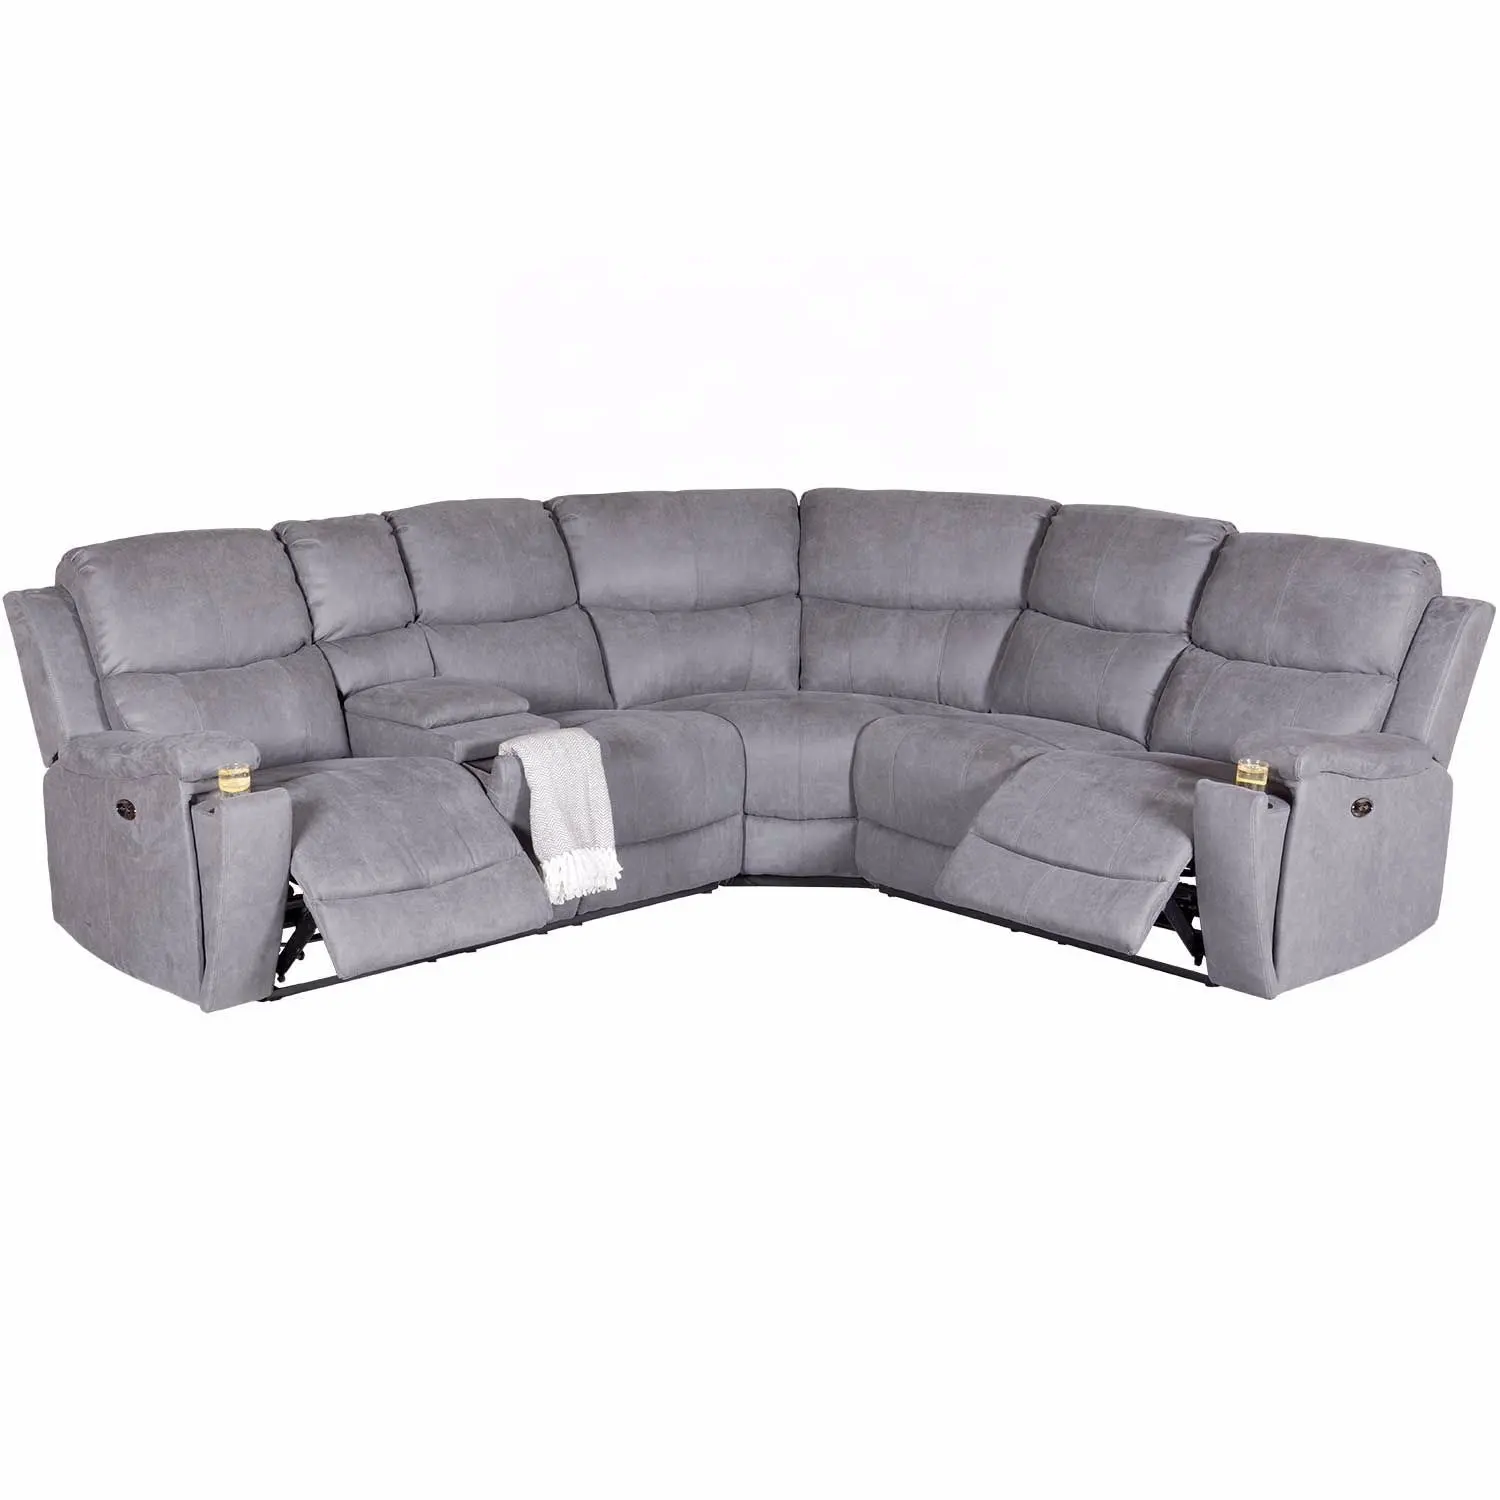 Gris moderno de la energía eléctrica sofá reclinable muebles 3pcs reclinable esquina redondeada transversal tela sofá para venta